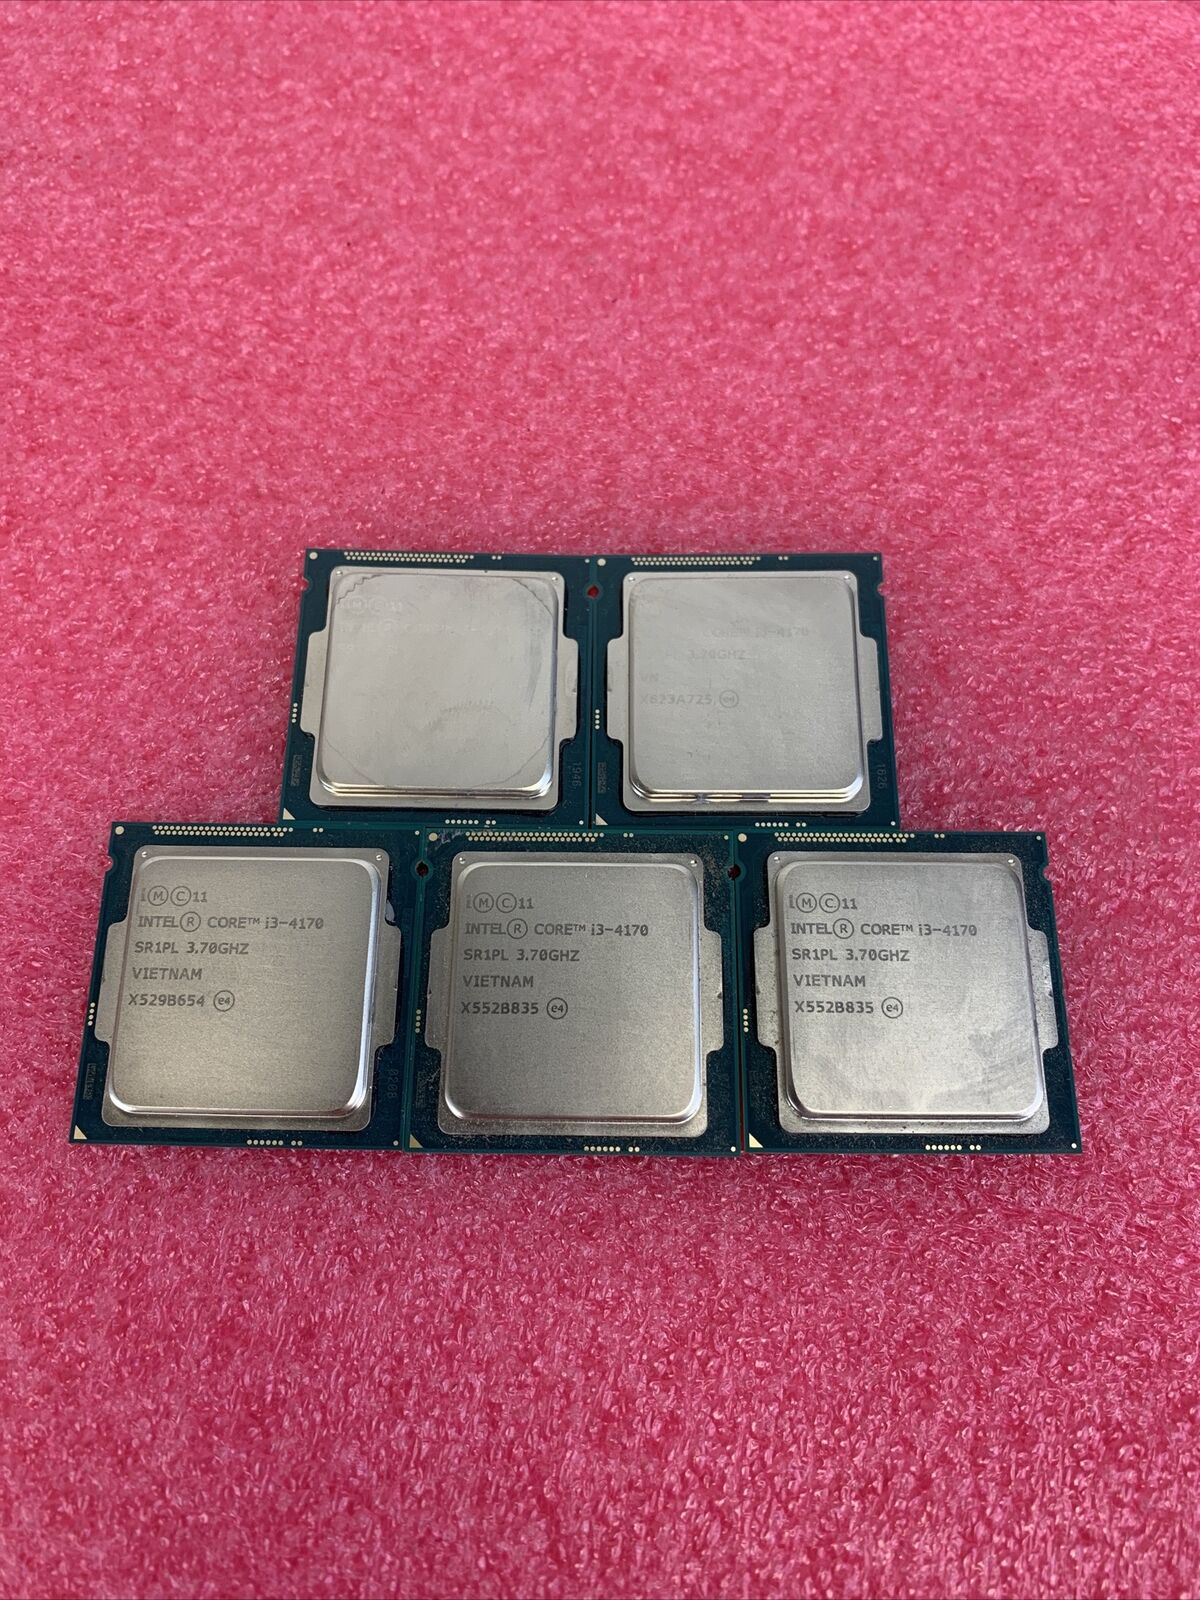 Lot of 5 Intel Core i3-4170 SR1PL 3.7GHz